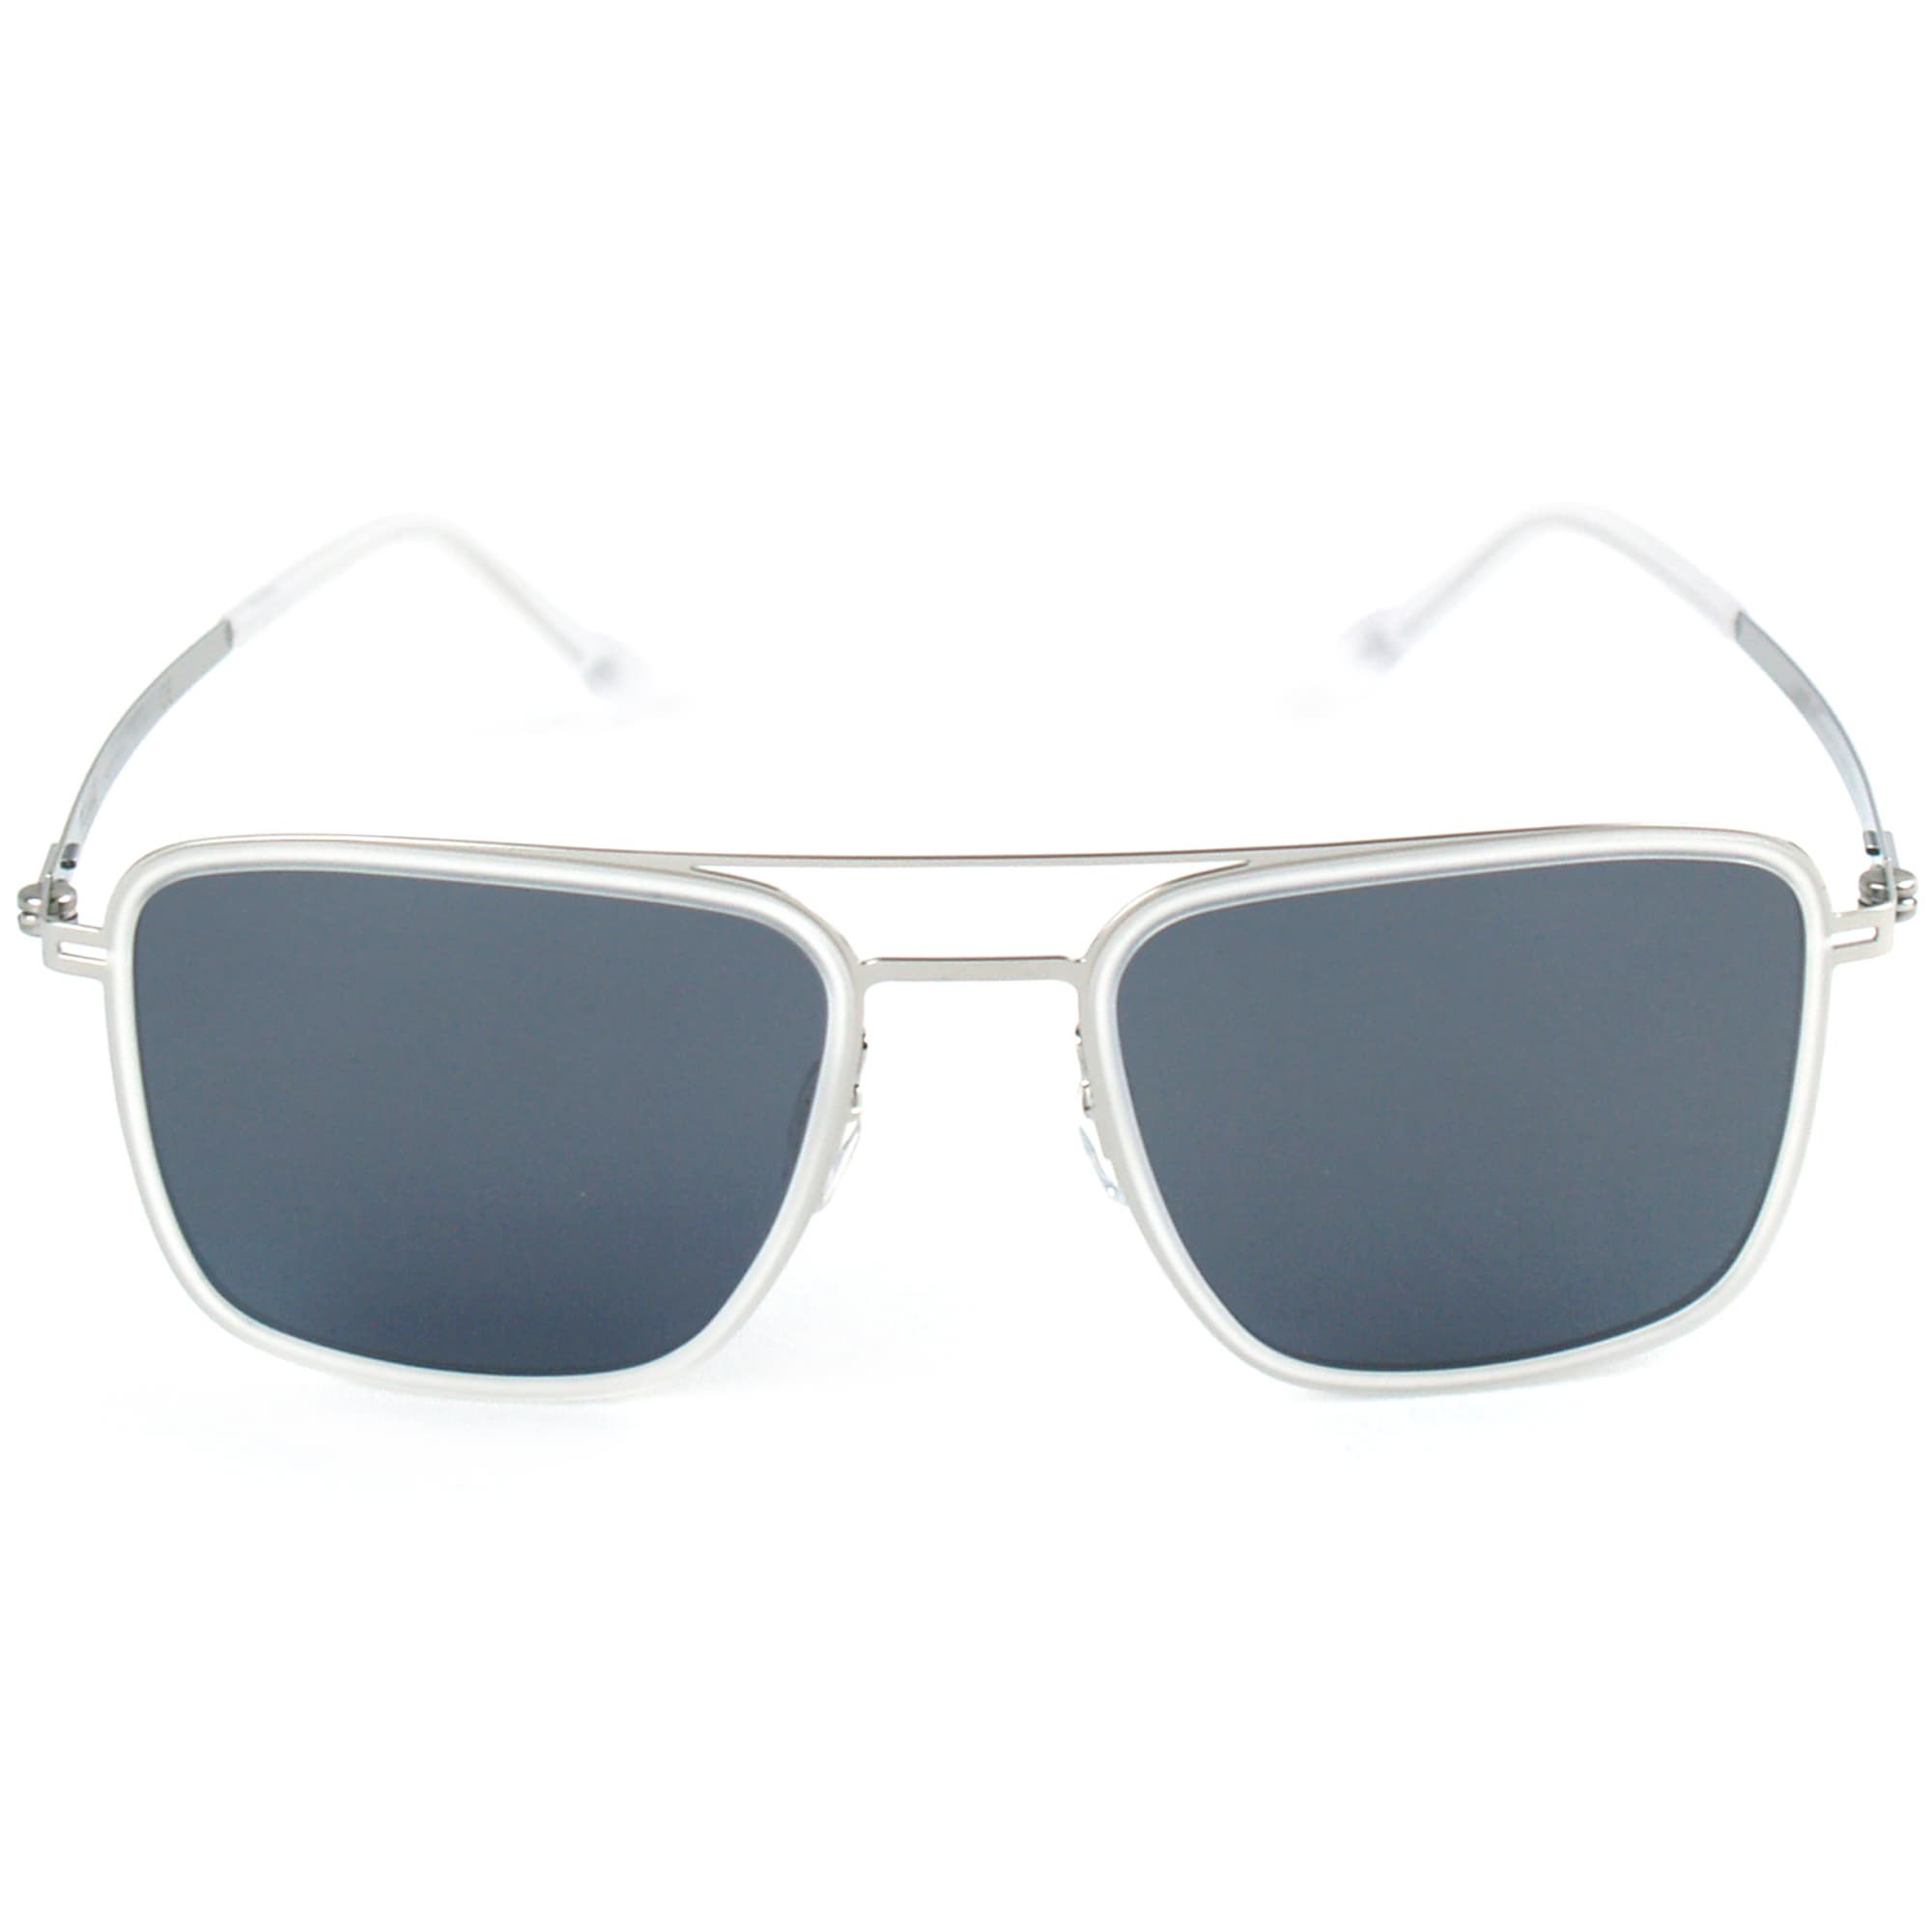 AviatorI Acetate _ Thin Stainless Steel  Frame Sunglasses